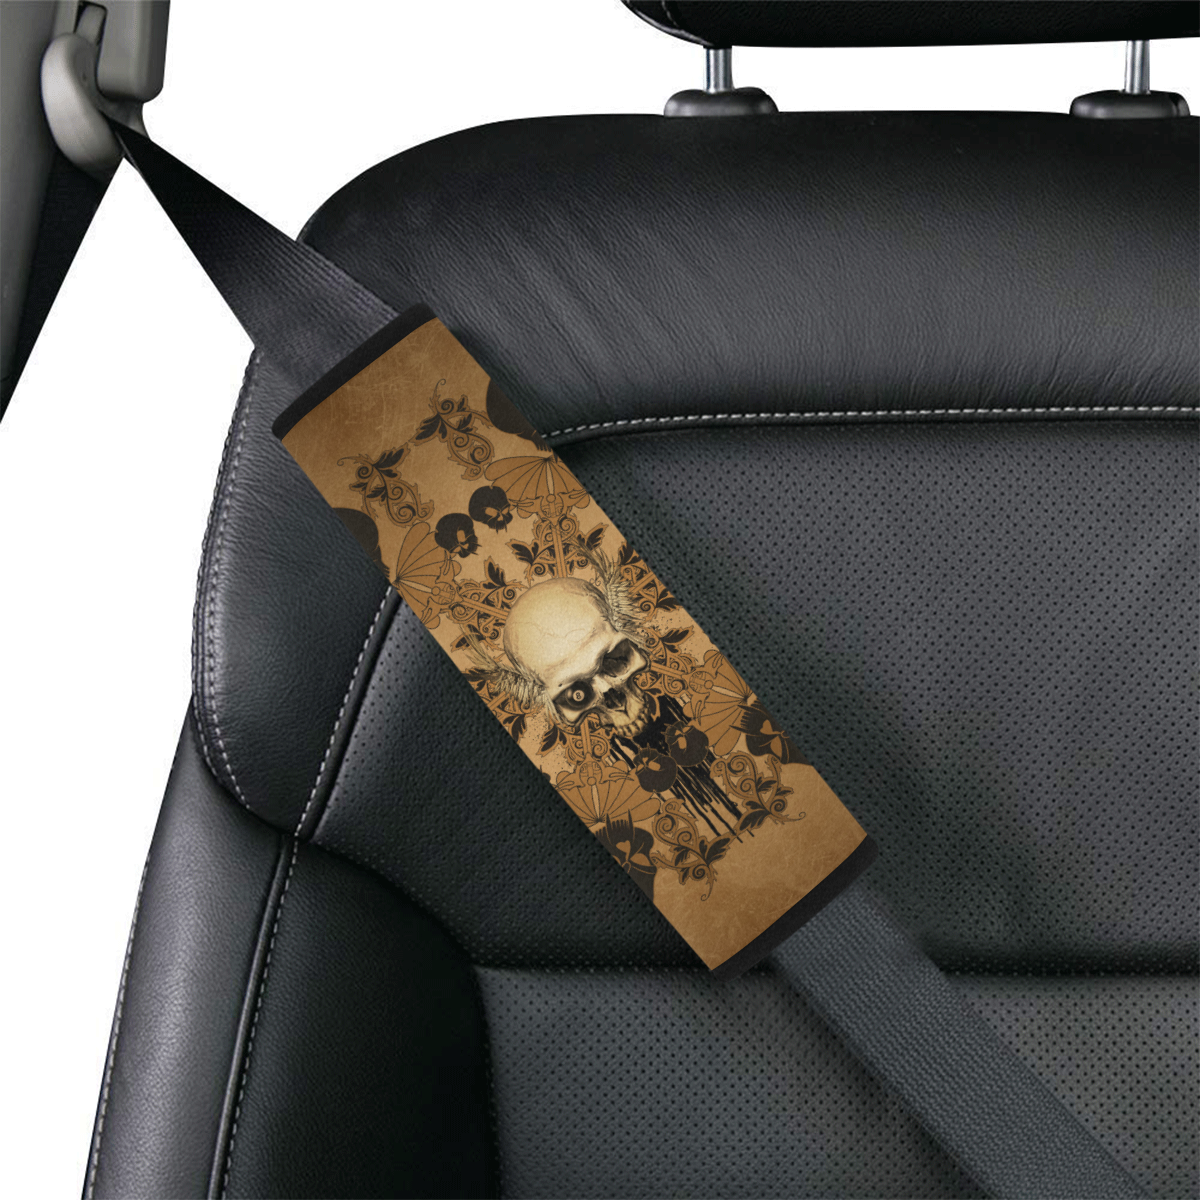 Skull with skull mandala on the background Car Seat Belt Cover 7''x8.5''